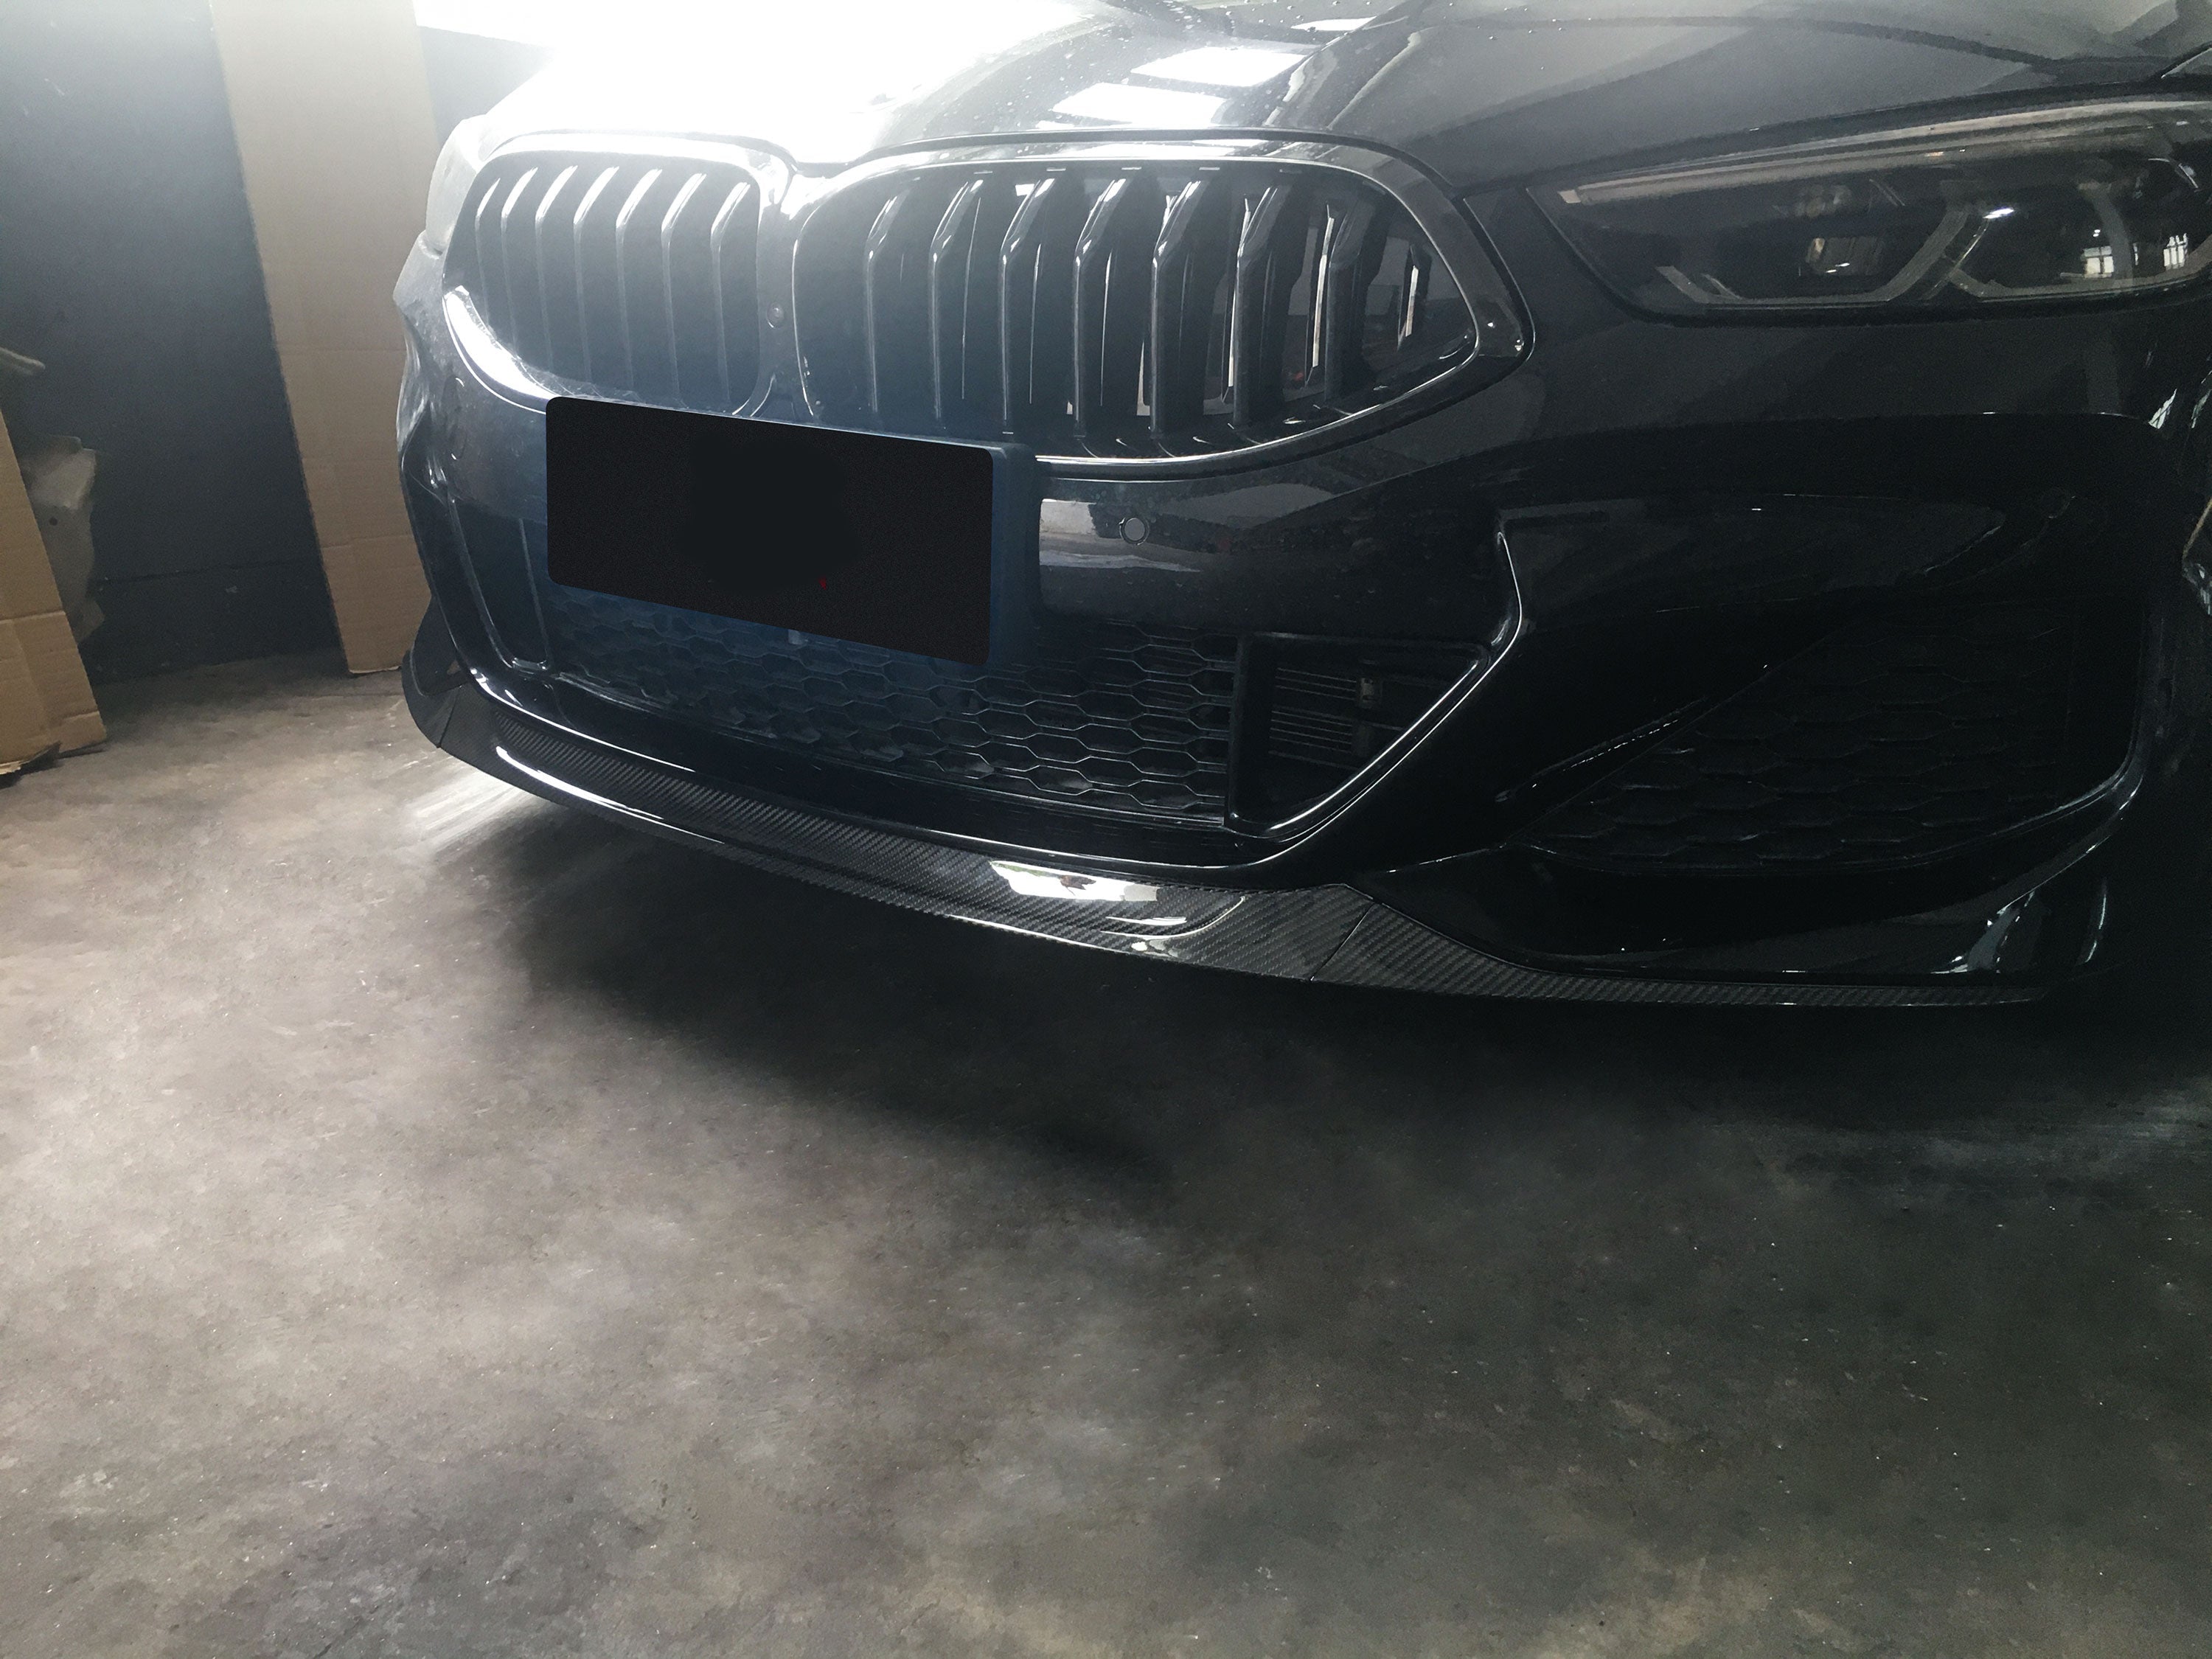 Signature Carbon Fiber Front Lip - BMW G14 / G15 / G16 8 Series